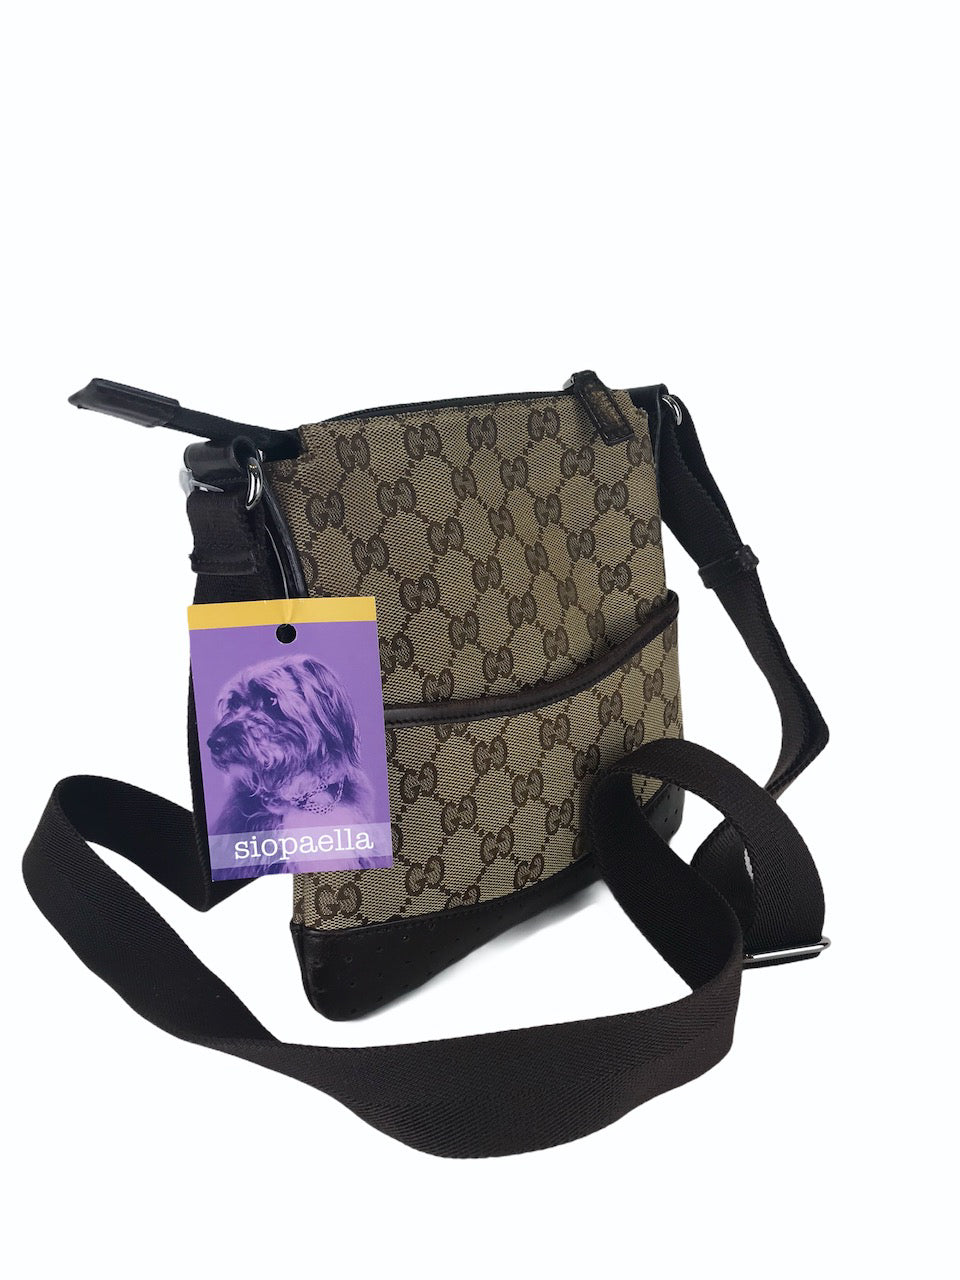 Gucci Small GG Canvas Crossbody - As Seen On Instagram - Siopaella Designer Exchange